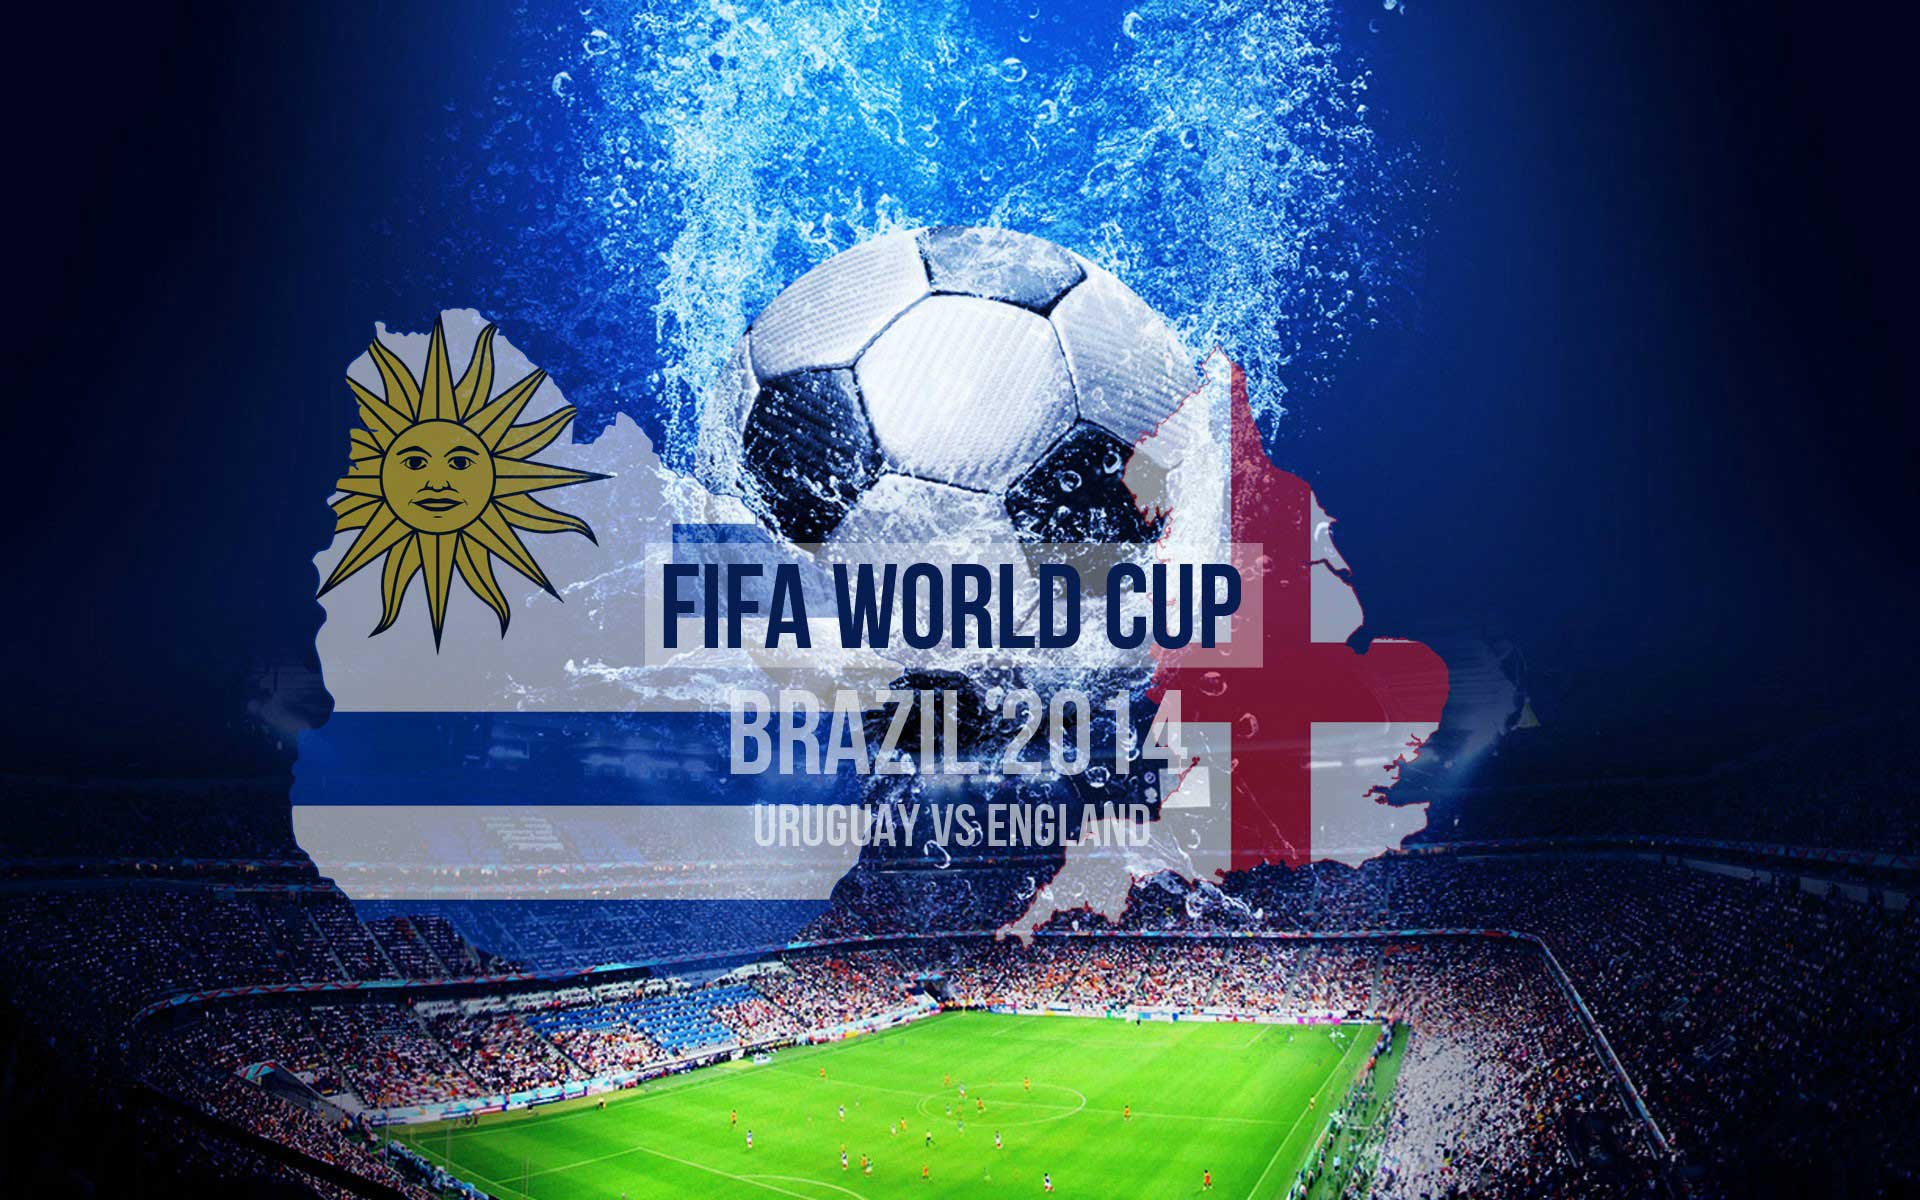 FIFA World Cup 2014 wallpaper, Uruguay vs England